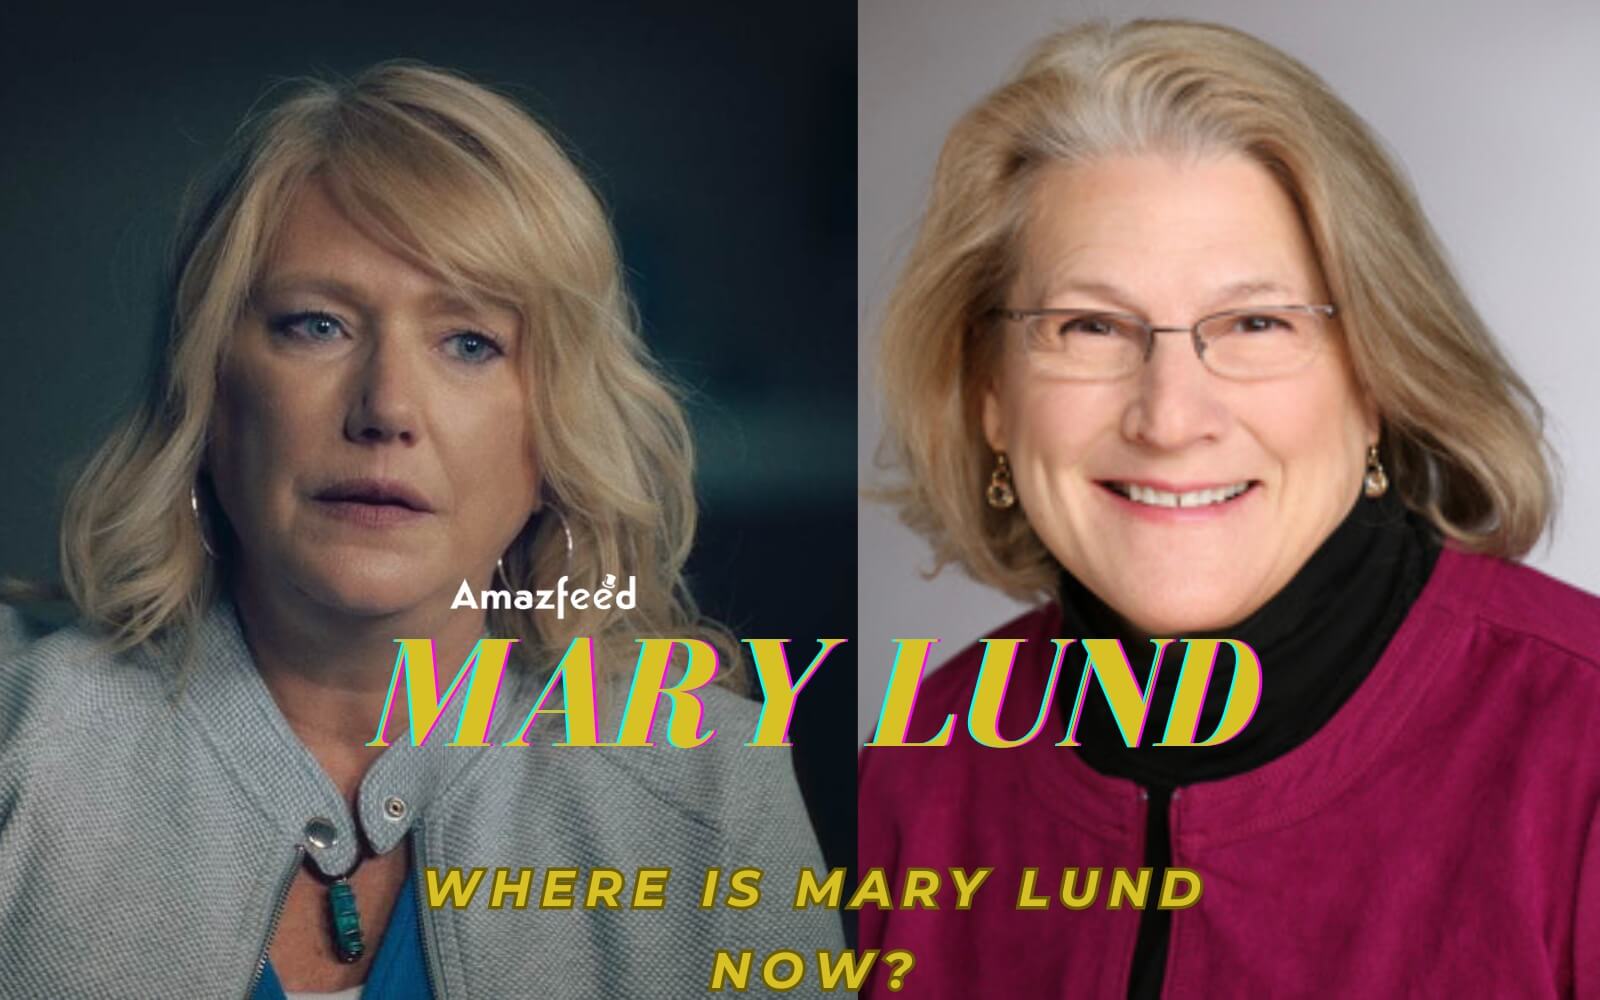 Mary Lund